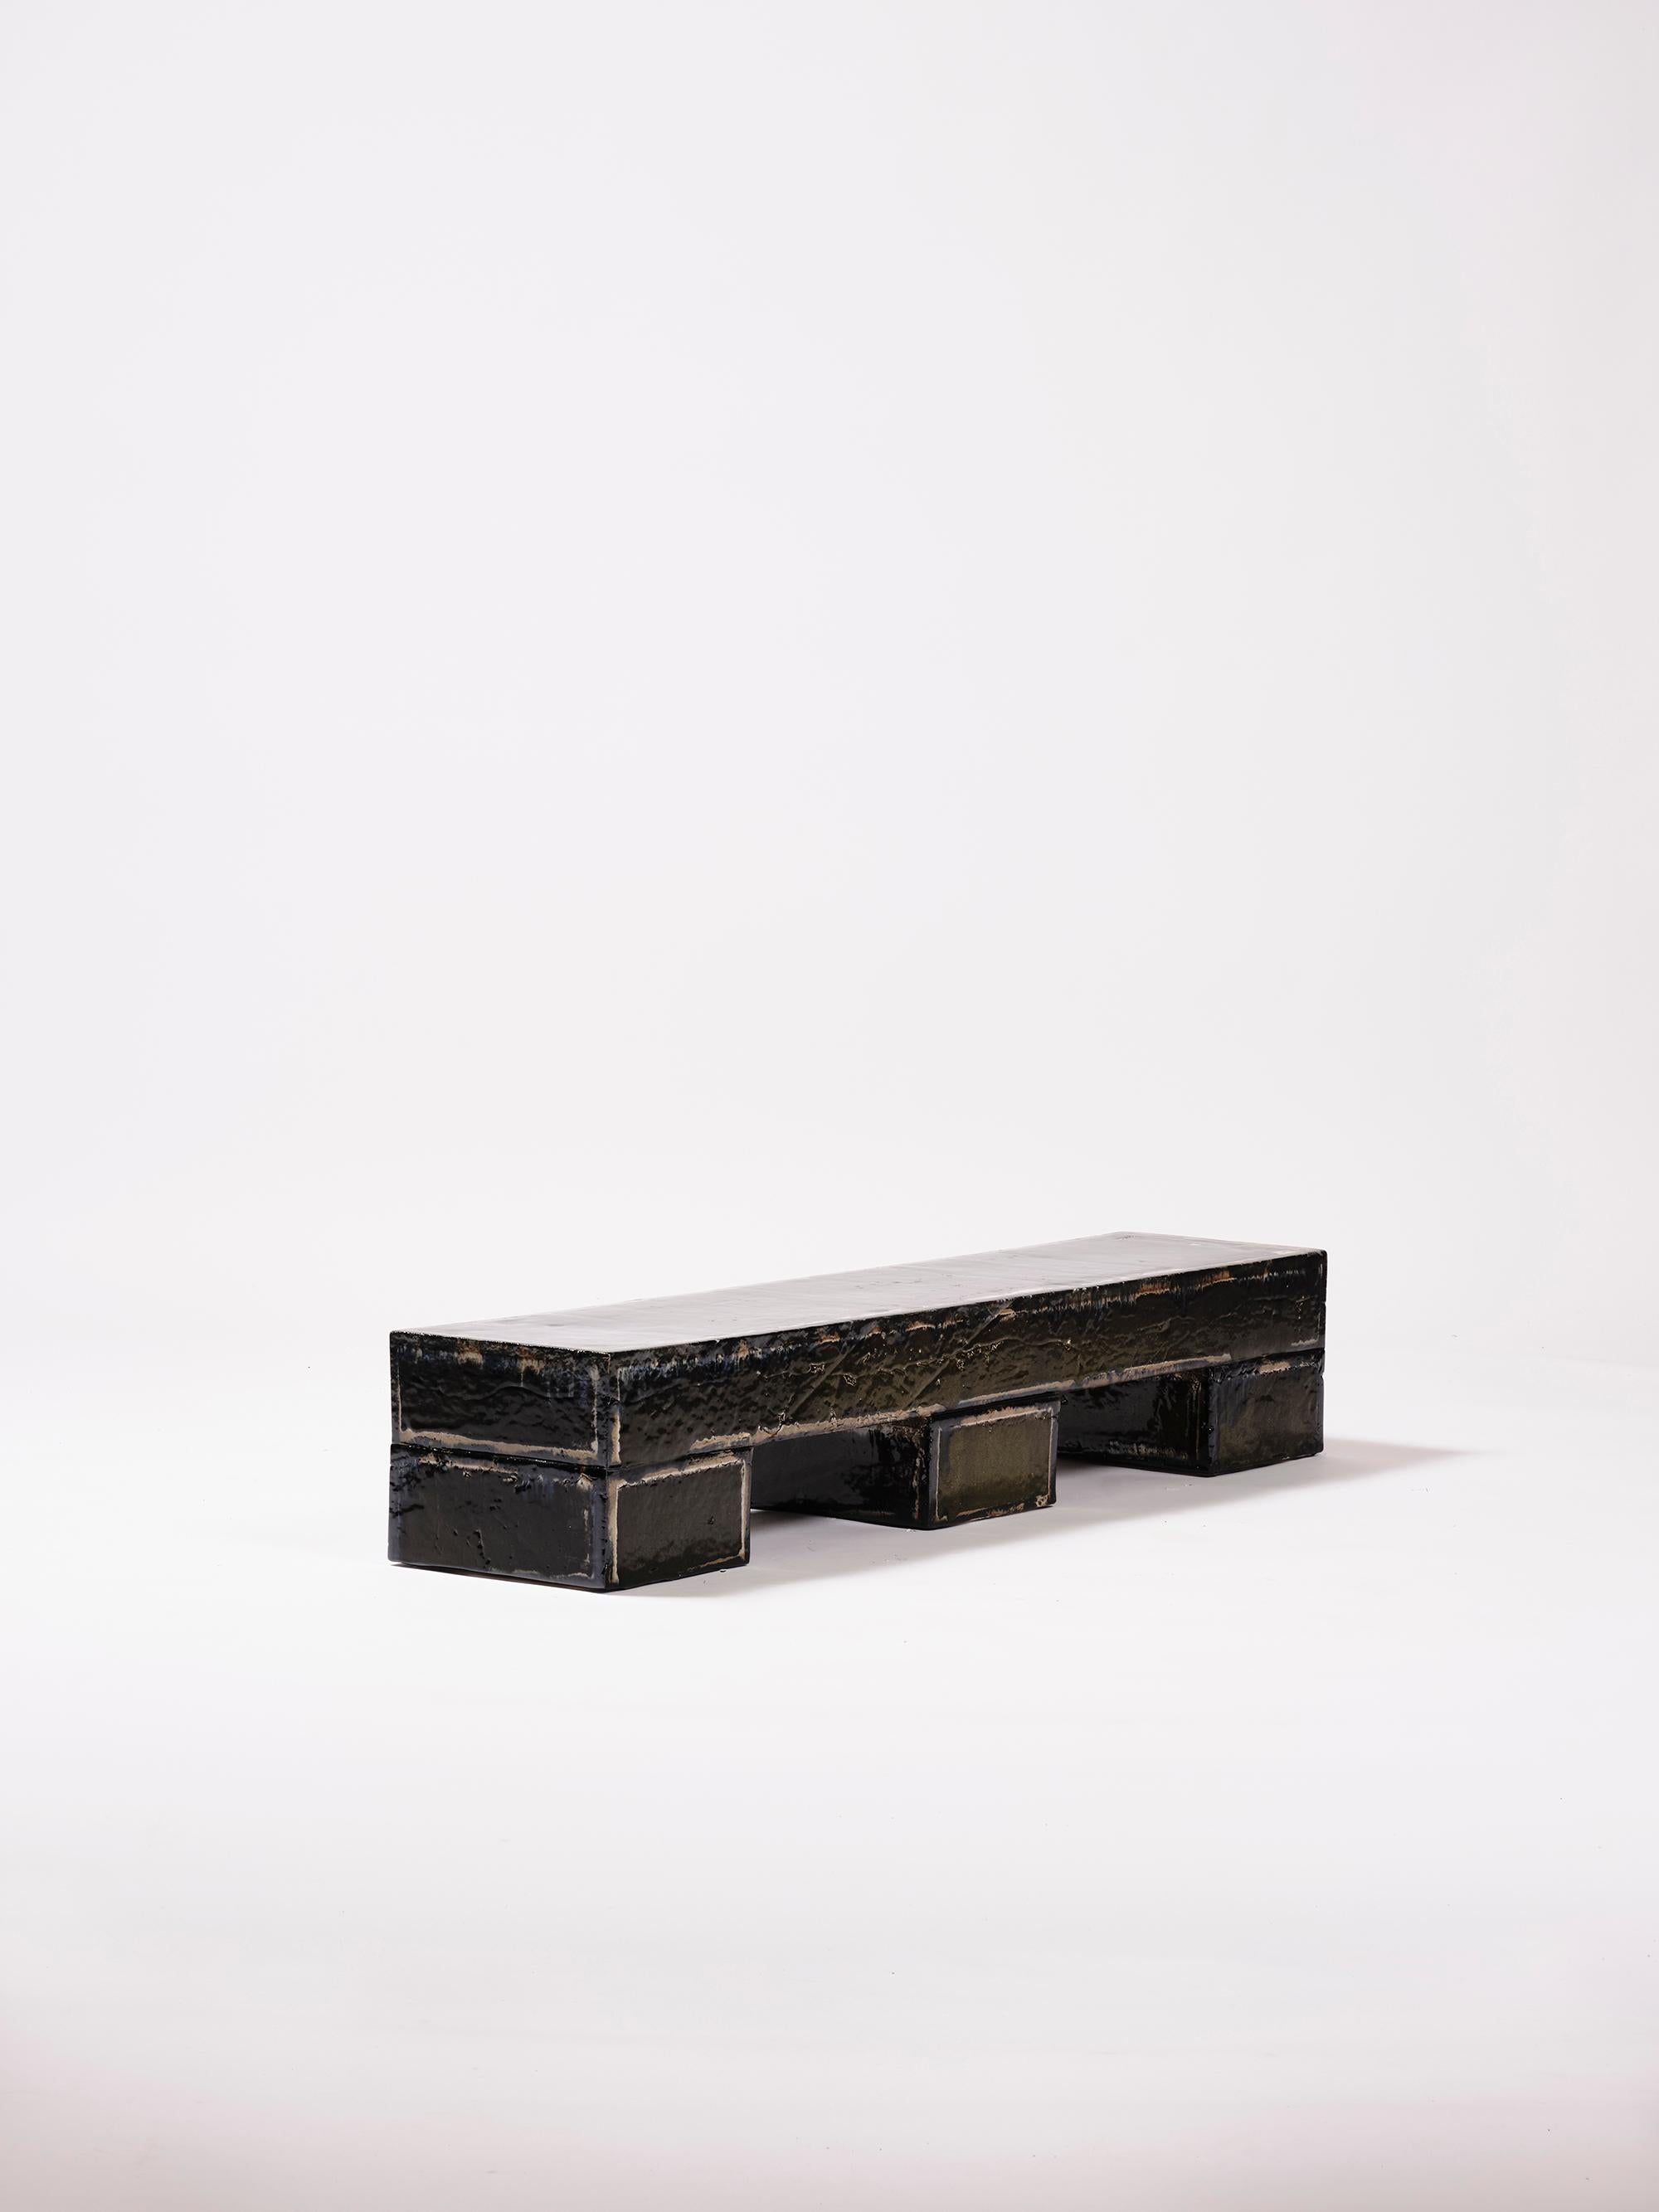 Spanish Contemporary Ceramic modern Coffeetable Bench Glazed Stoneware Black Blue For Sale